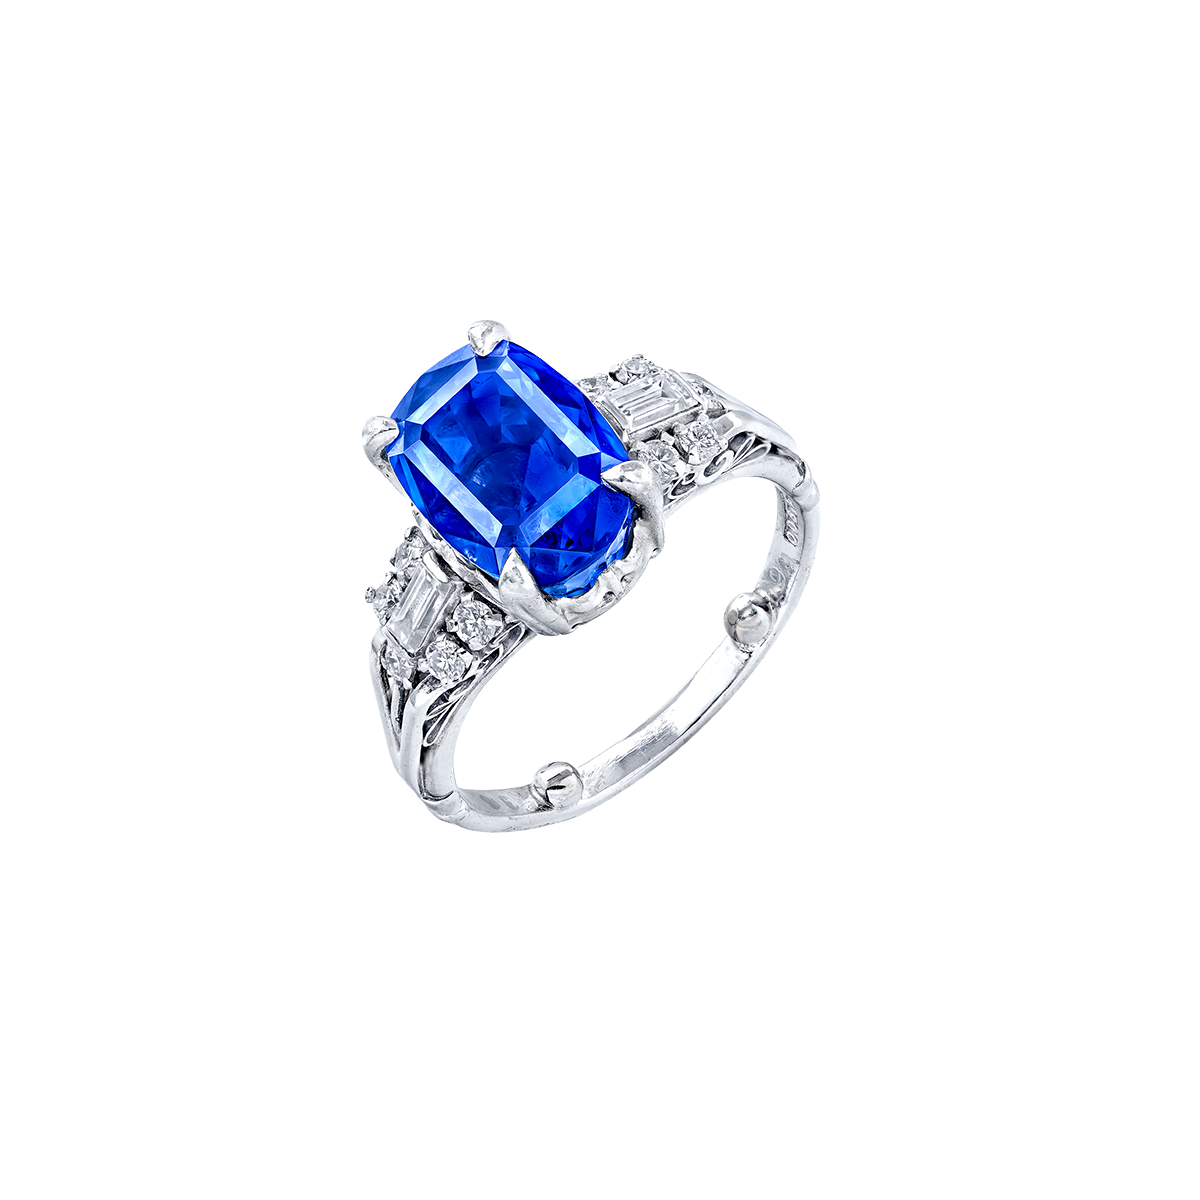 6.48克拉 斯里蘭卡天然無燒皇家藍藍寶鑽戒
SRI LANKA ROYAL BLUE SHAPPHIRE 
AND DIAMOND RING